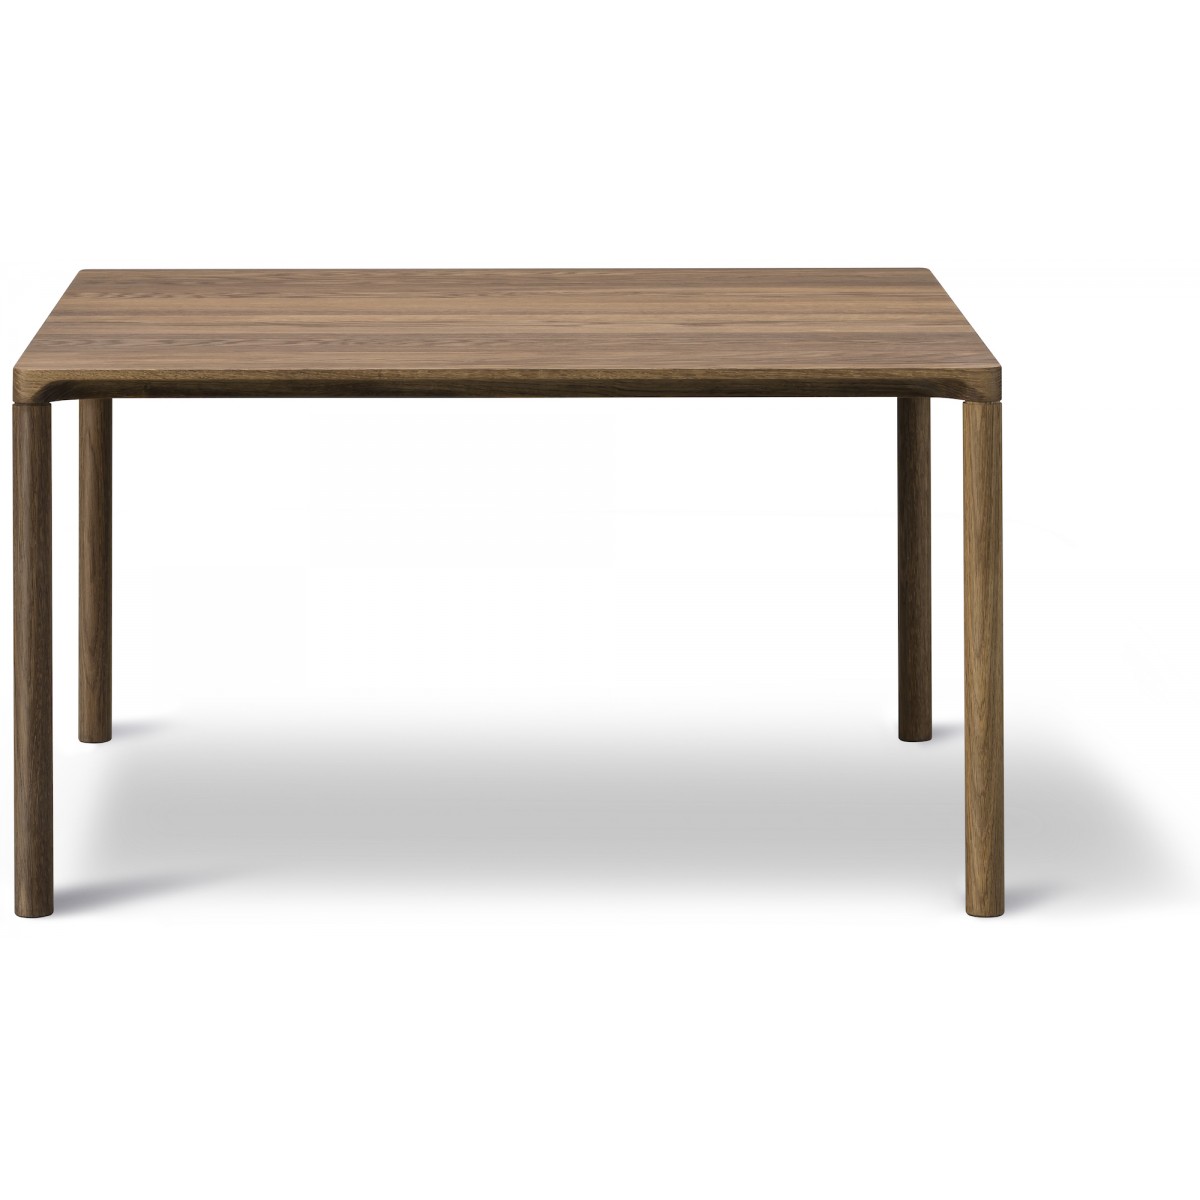 smoked oiled oak – 75 x 75 cm – Piloti 6720 coffee table